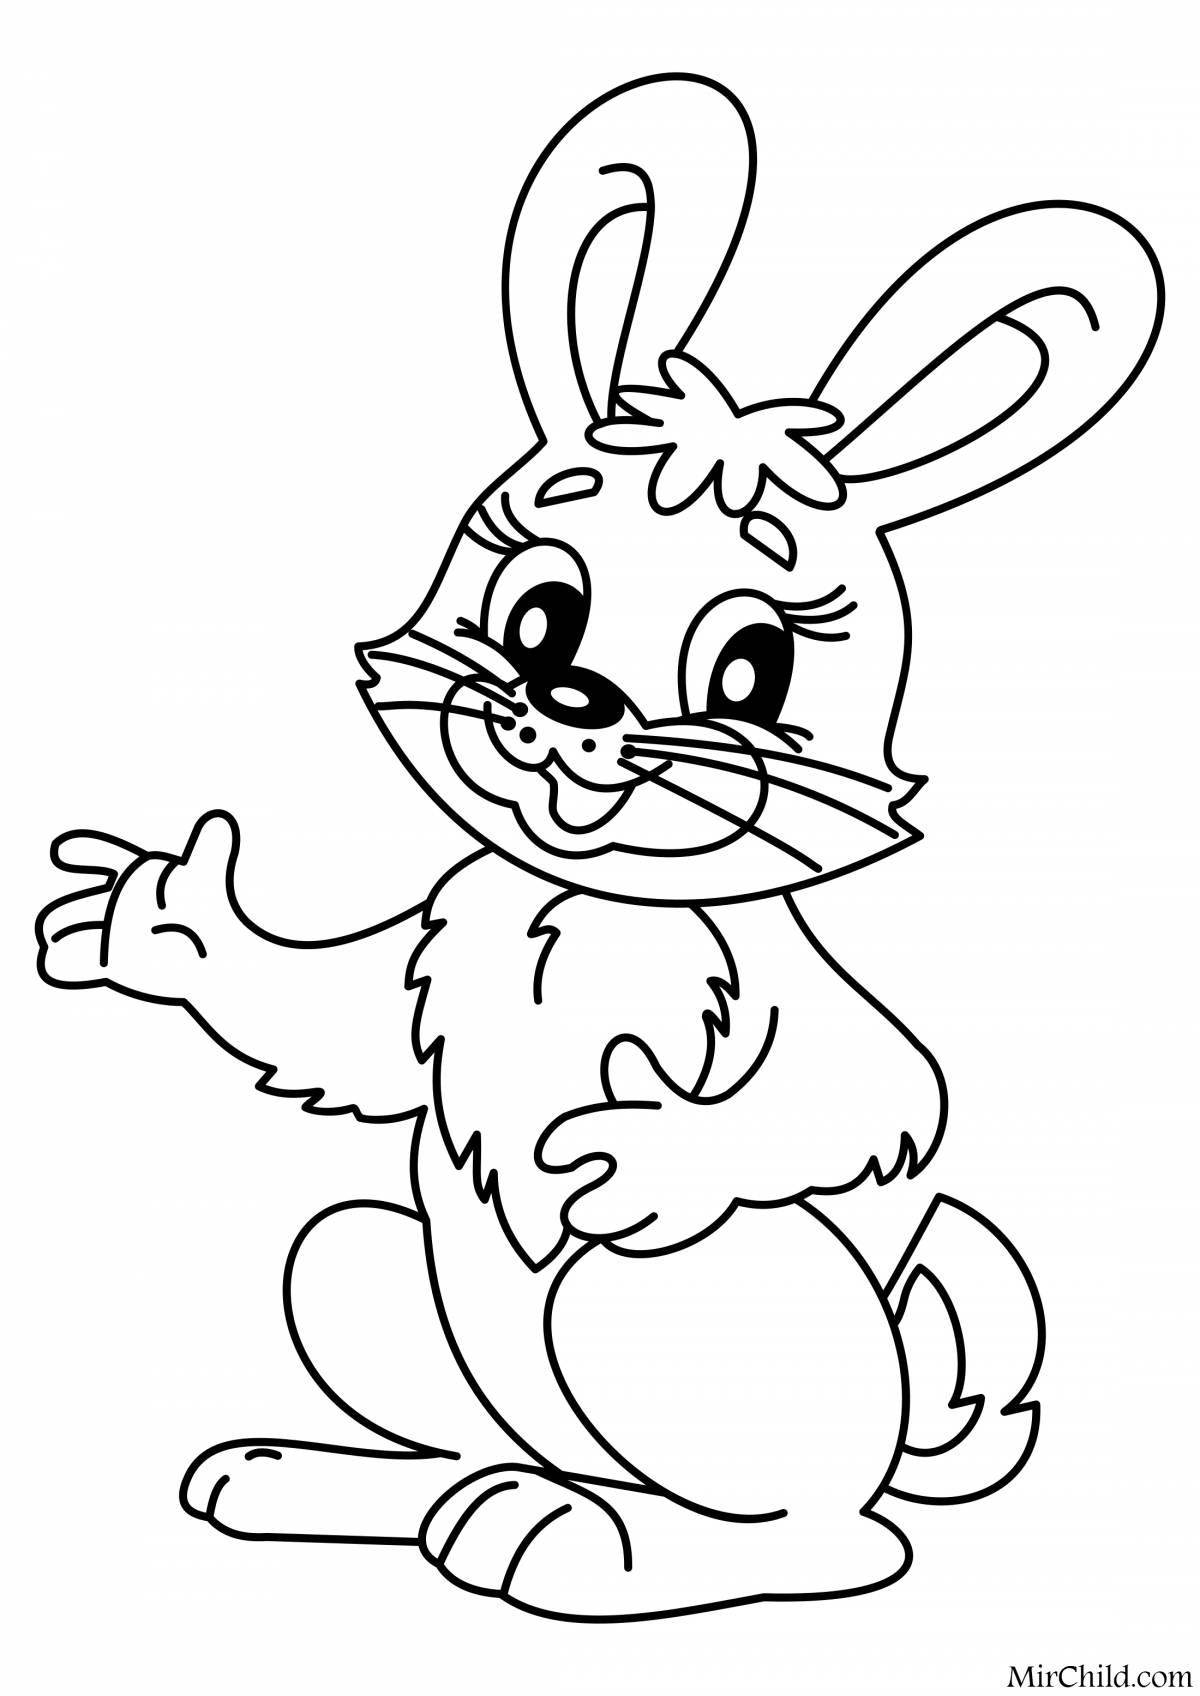 Cute rabbit coloring book for kids